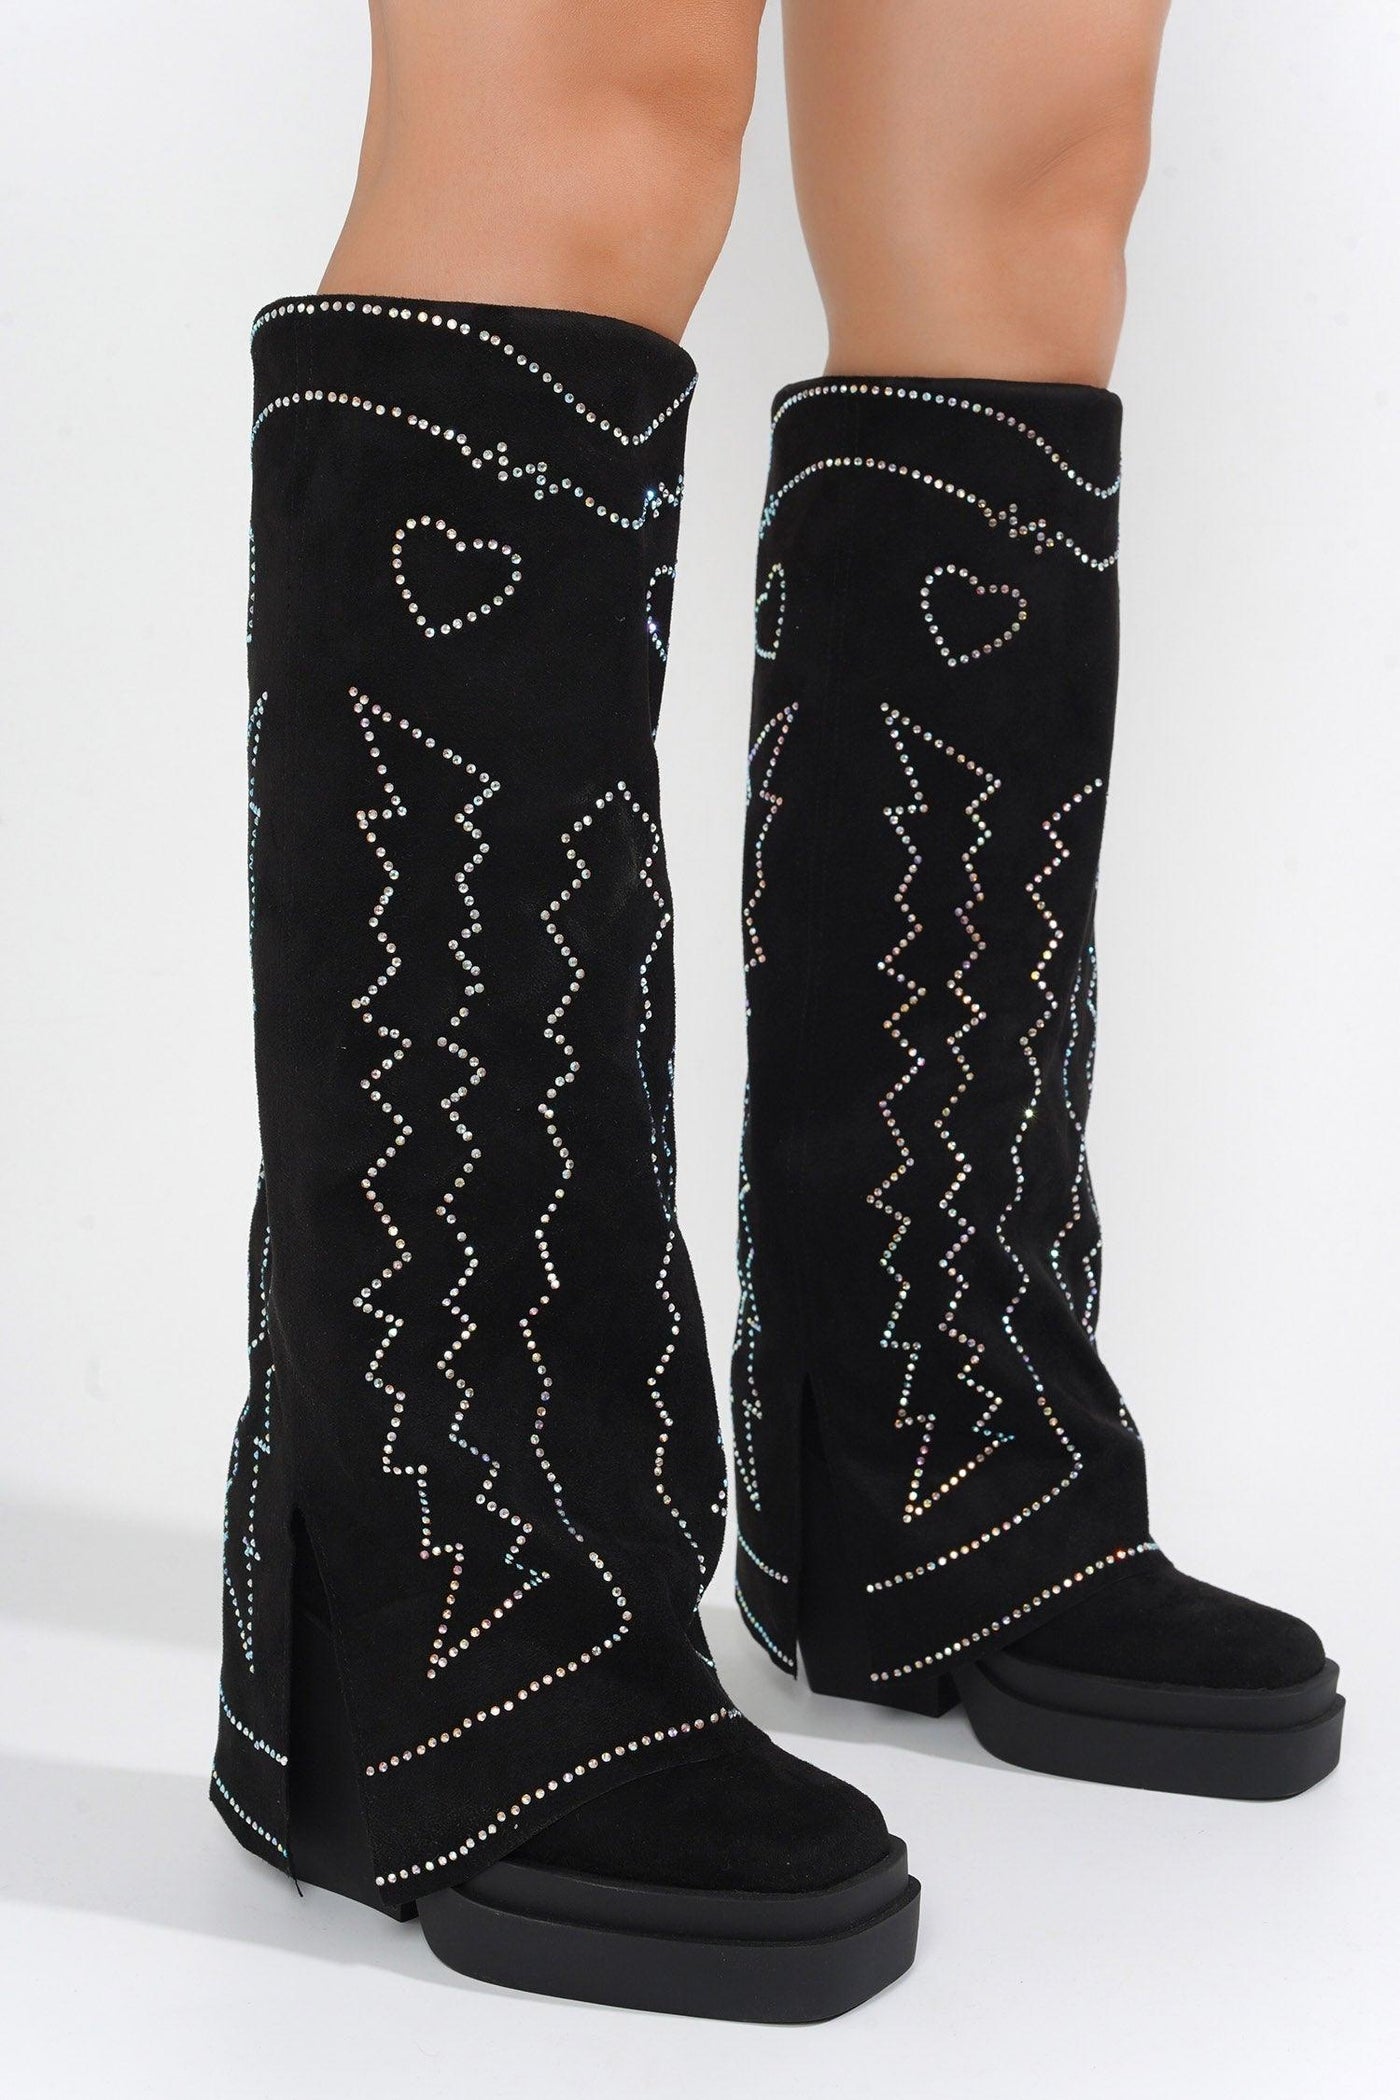 LUVO - BLACK Thigh High Boots - AMIClubwear